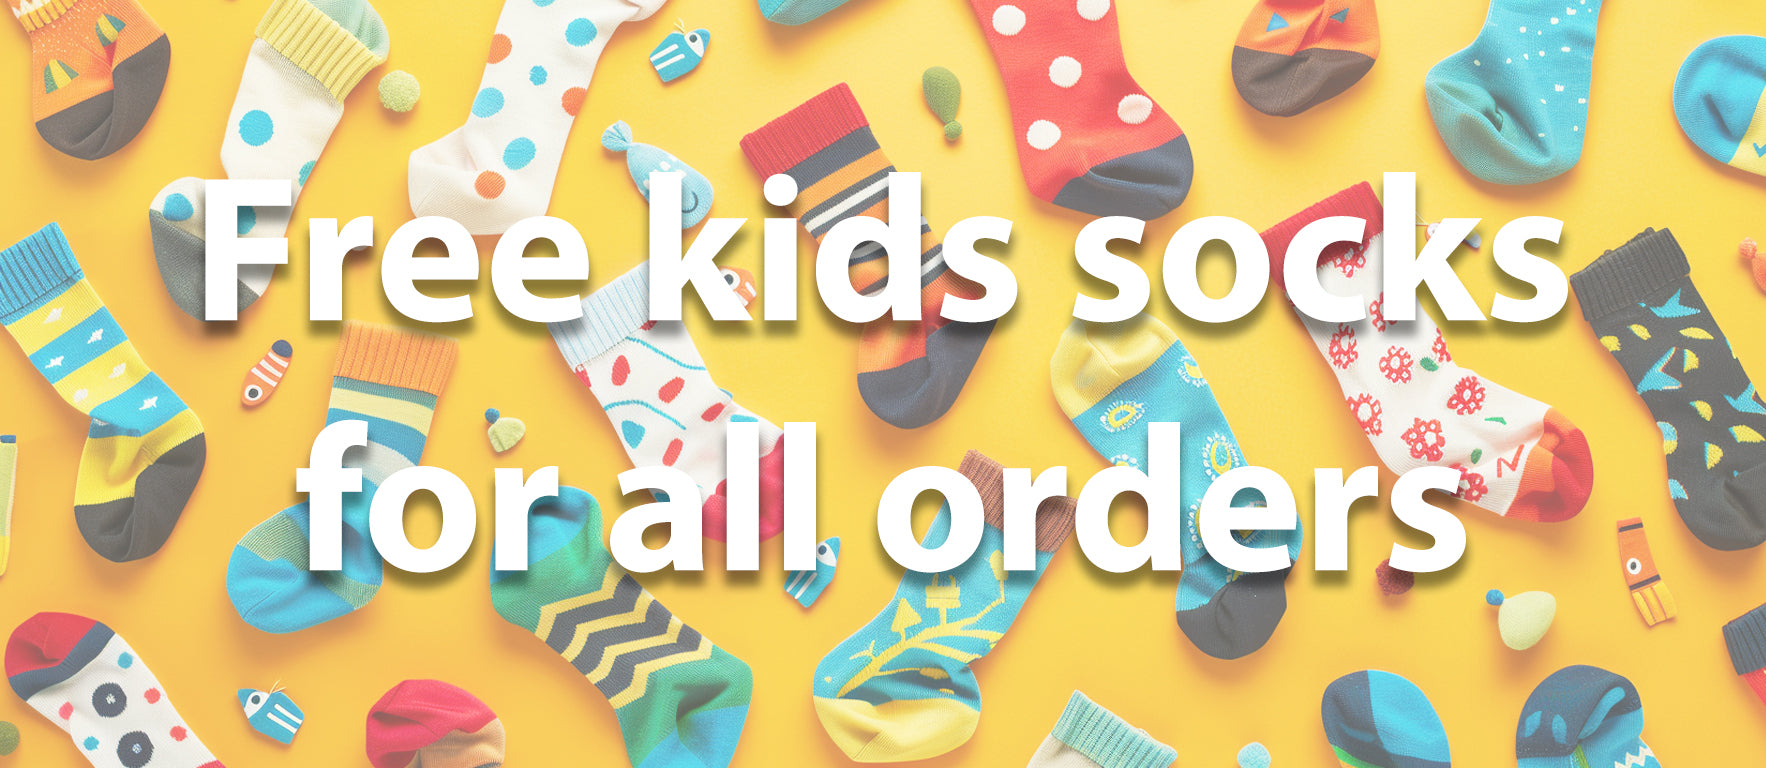 Free kids socks for all orders